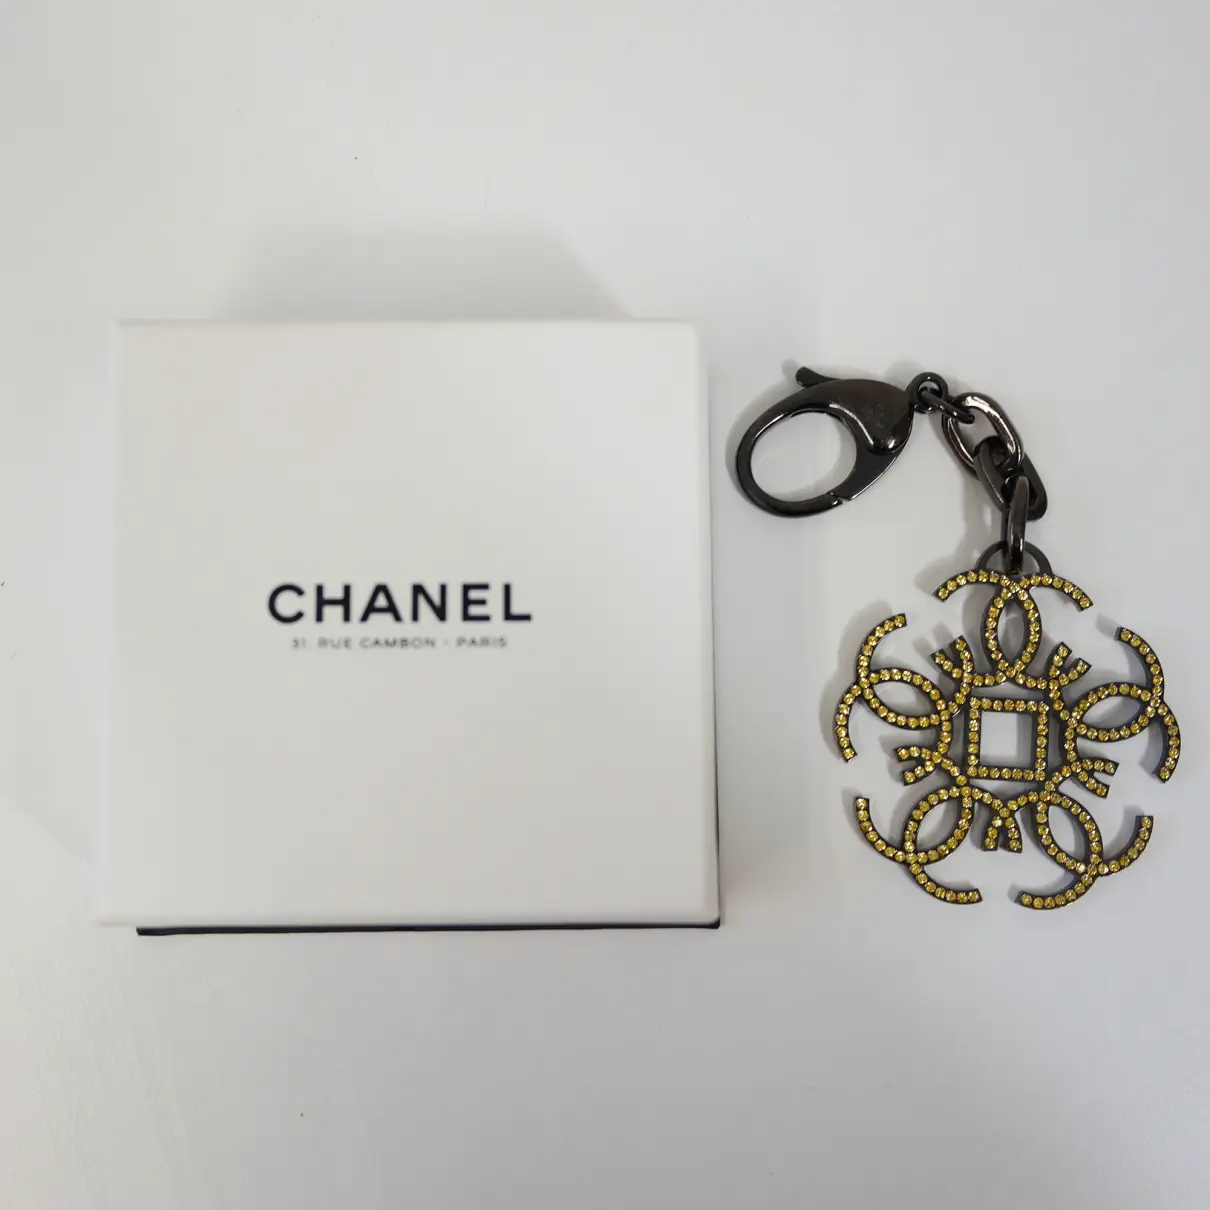 Buy Chanel CC bag charm online